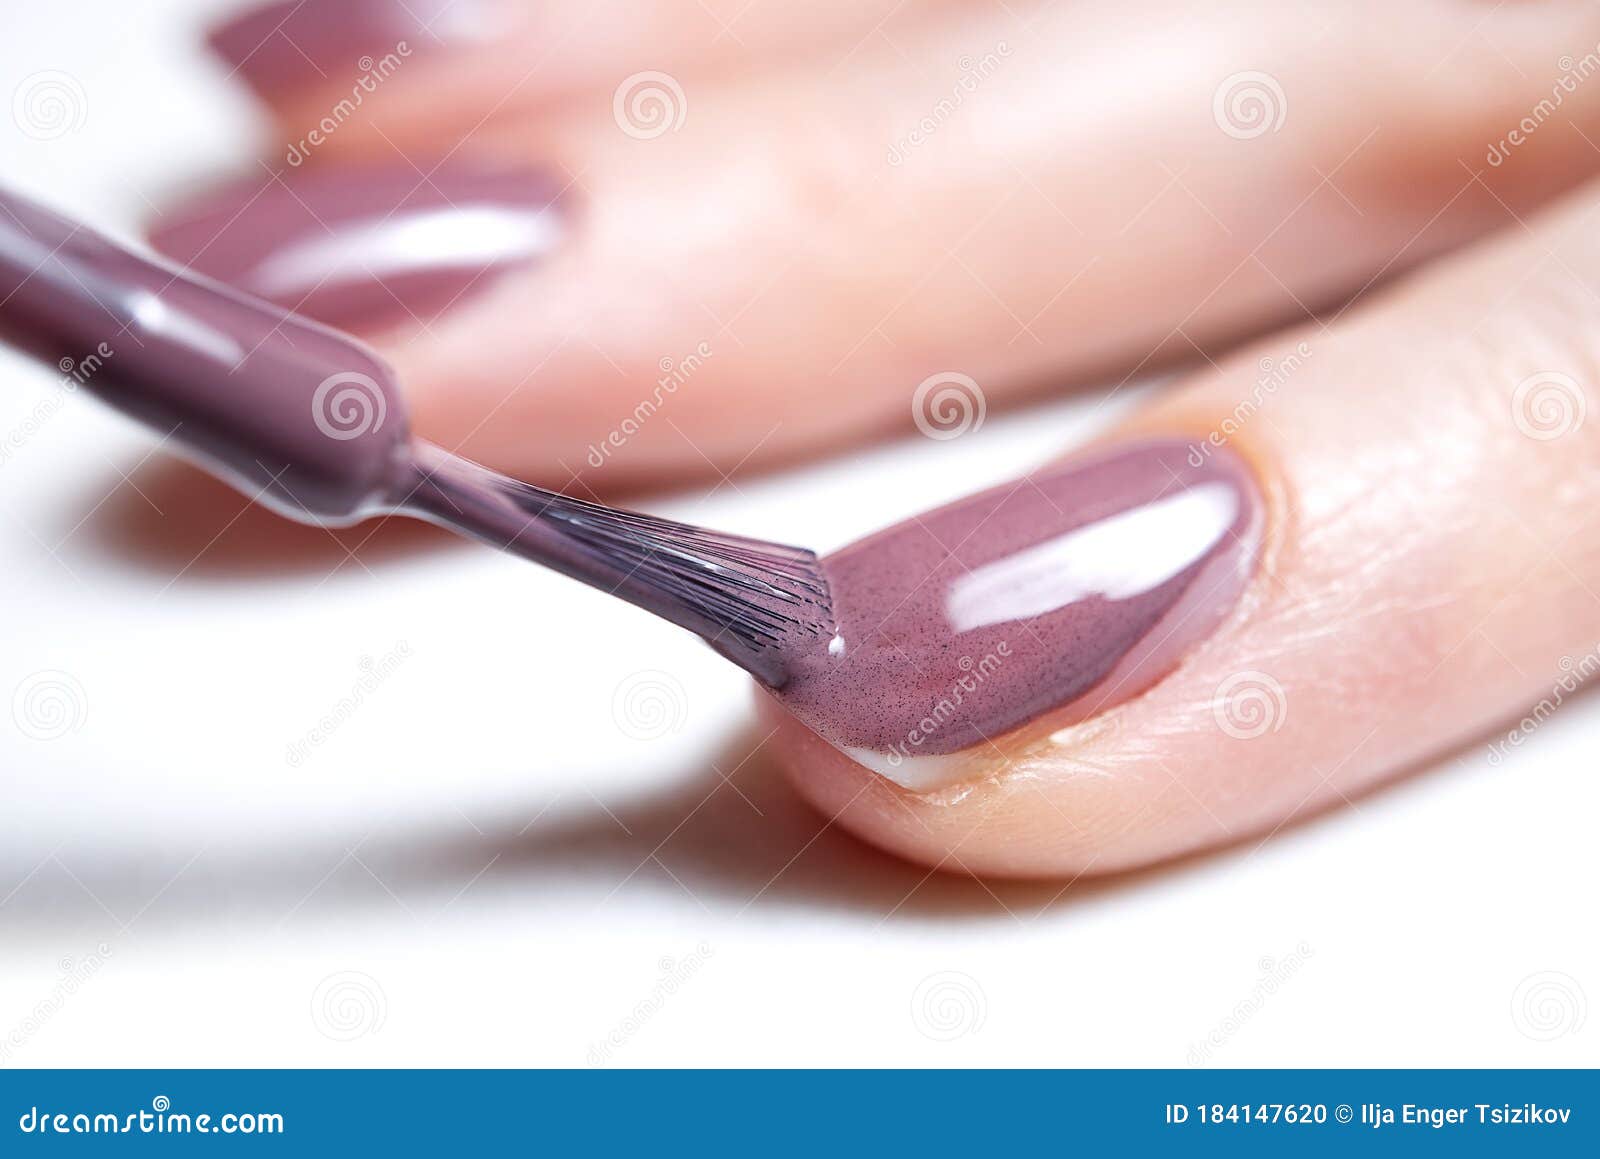 Woman Applying Nail Polish. Beautiful Nails. Woman Applying Polish on Nails  at Home. Pastel Nail Polish on Fingernail Stock Photo - Image of closeup,  business: 184147620